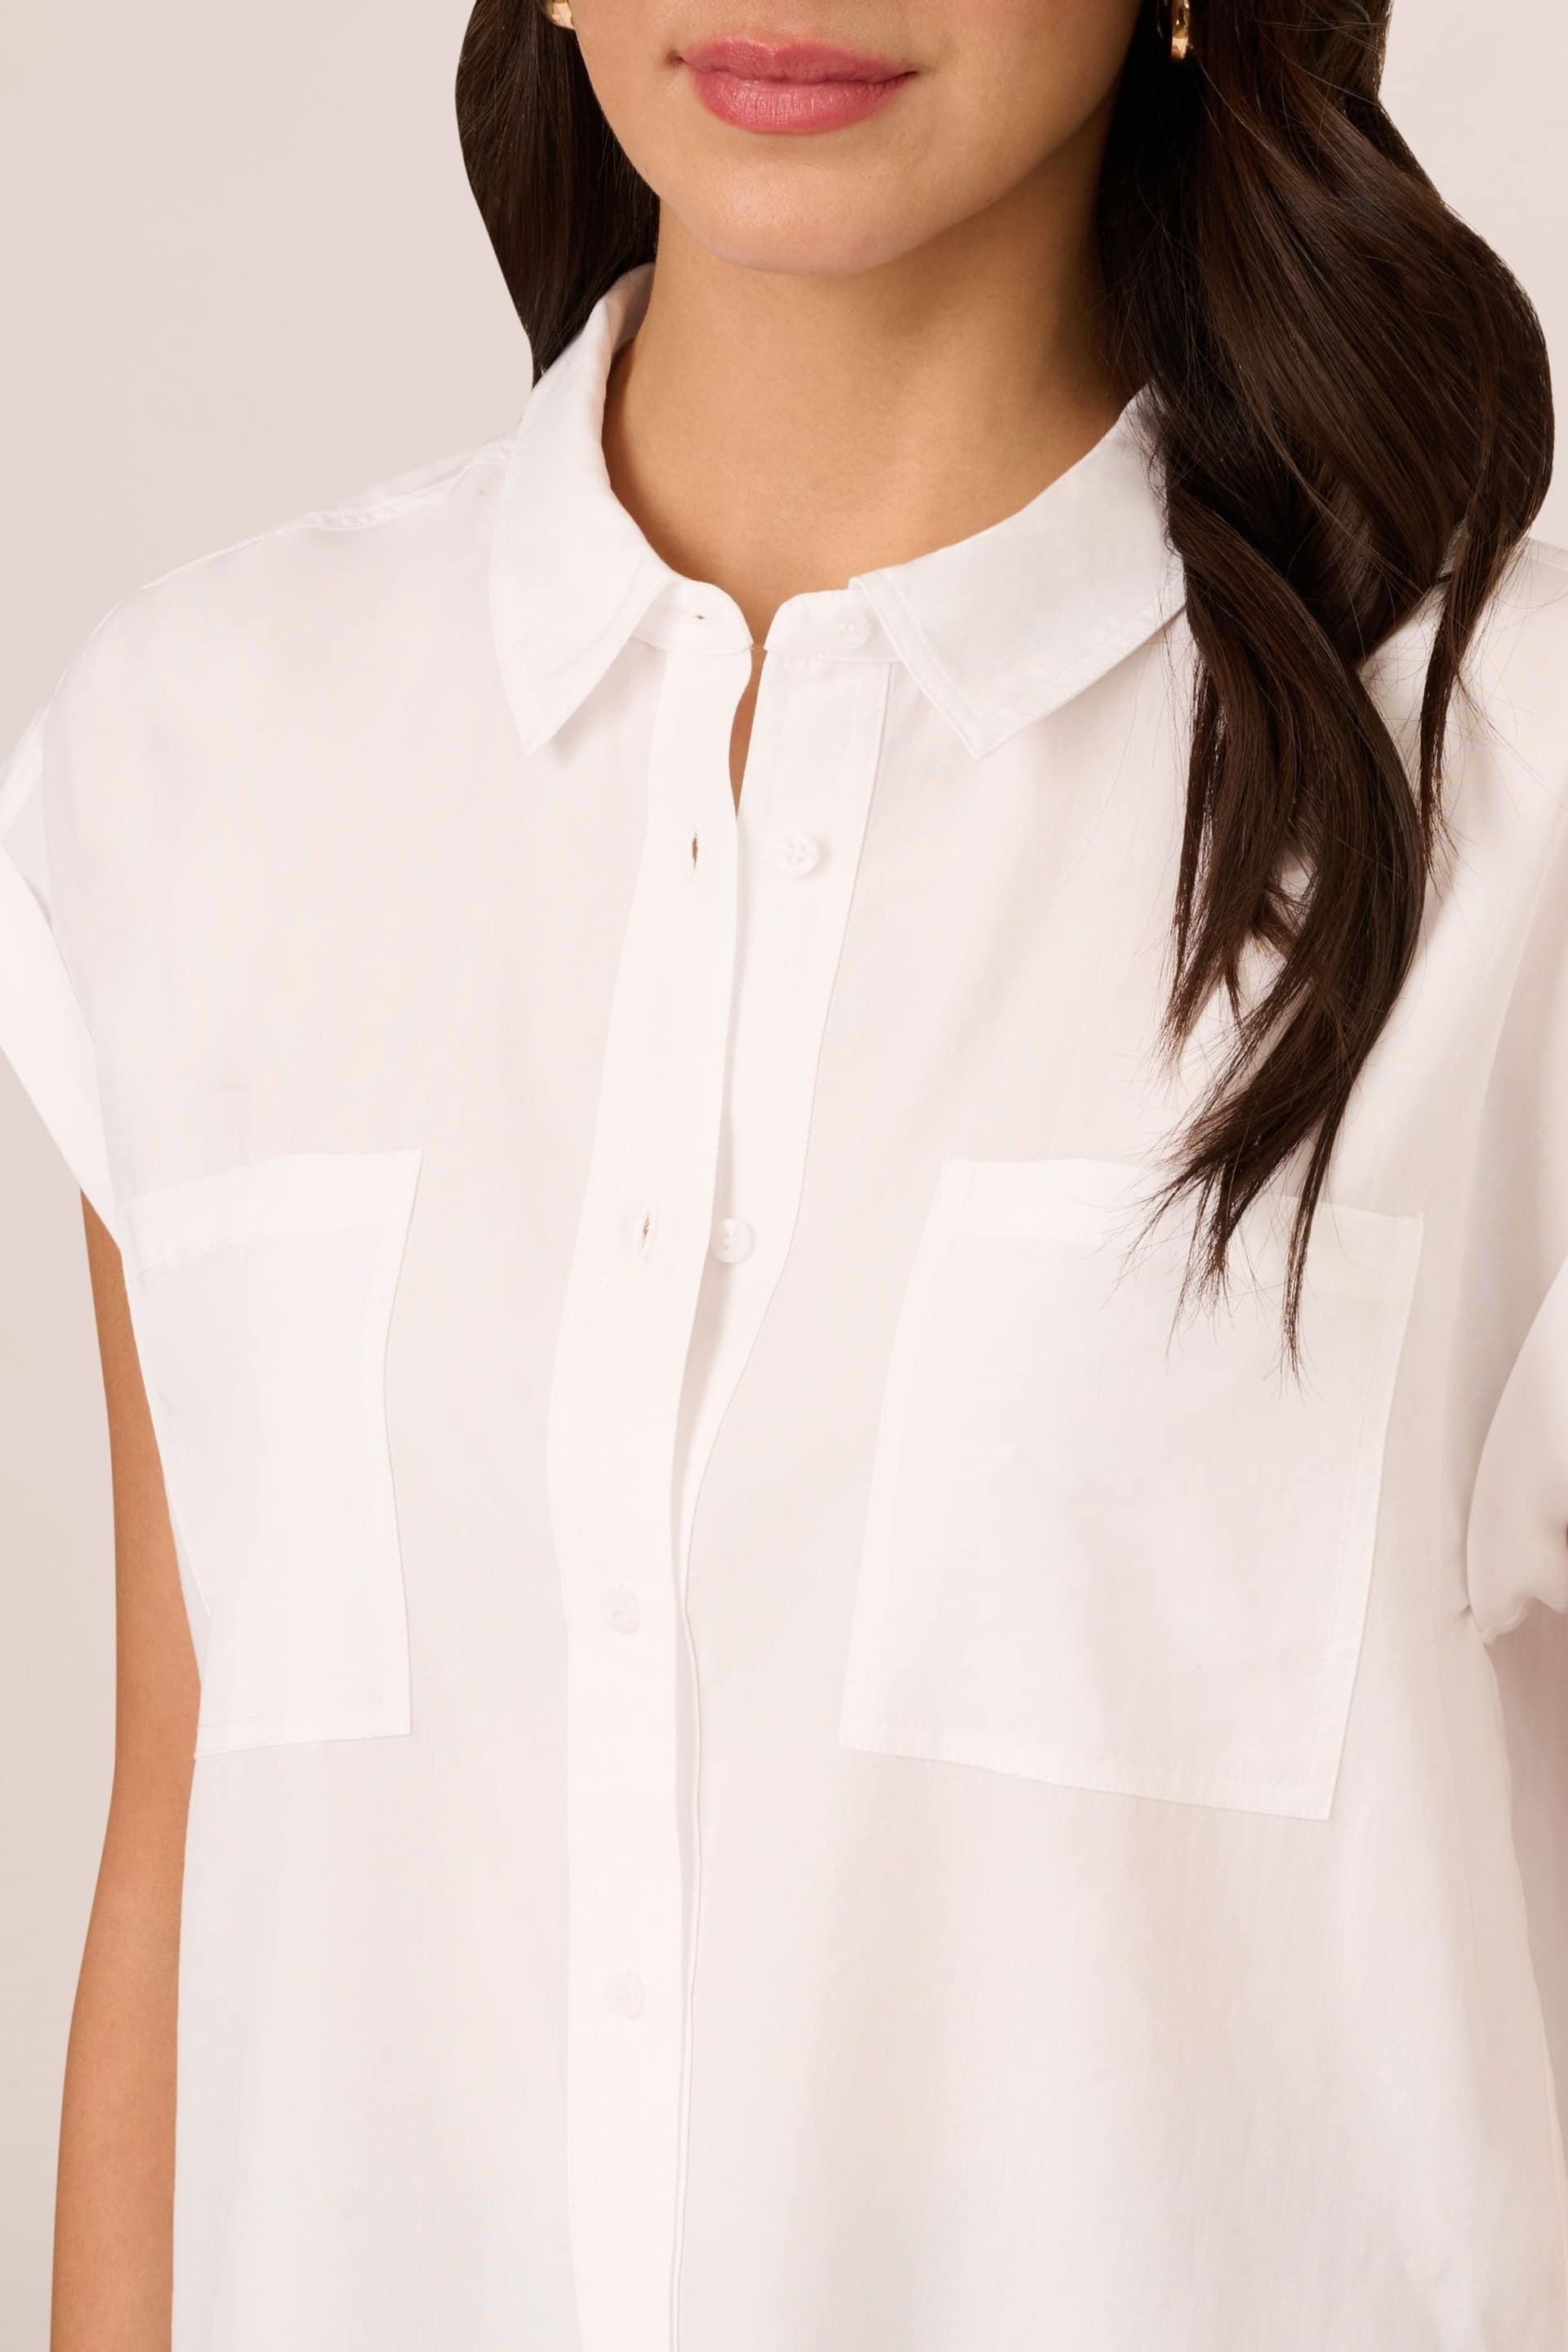 Adrianna Papell Sleeveless Woven Utility White Shirt - Image 4 of 7